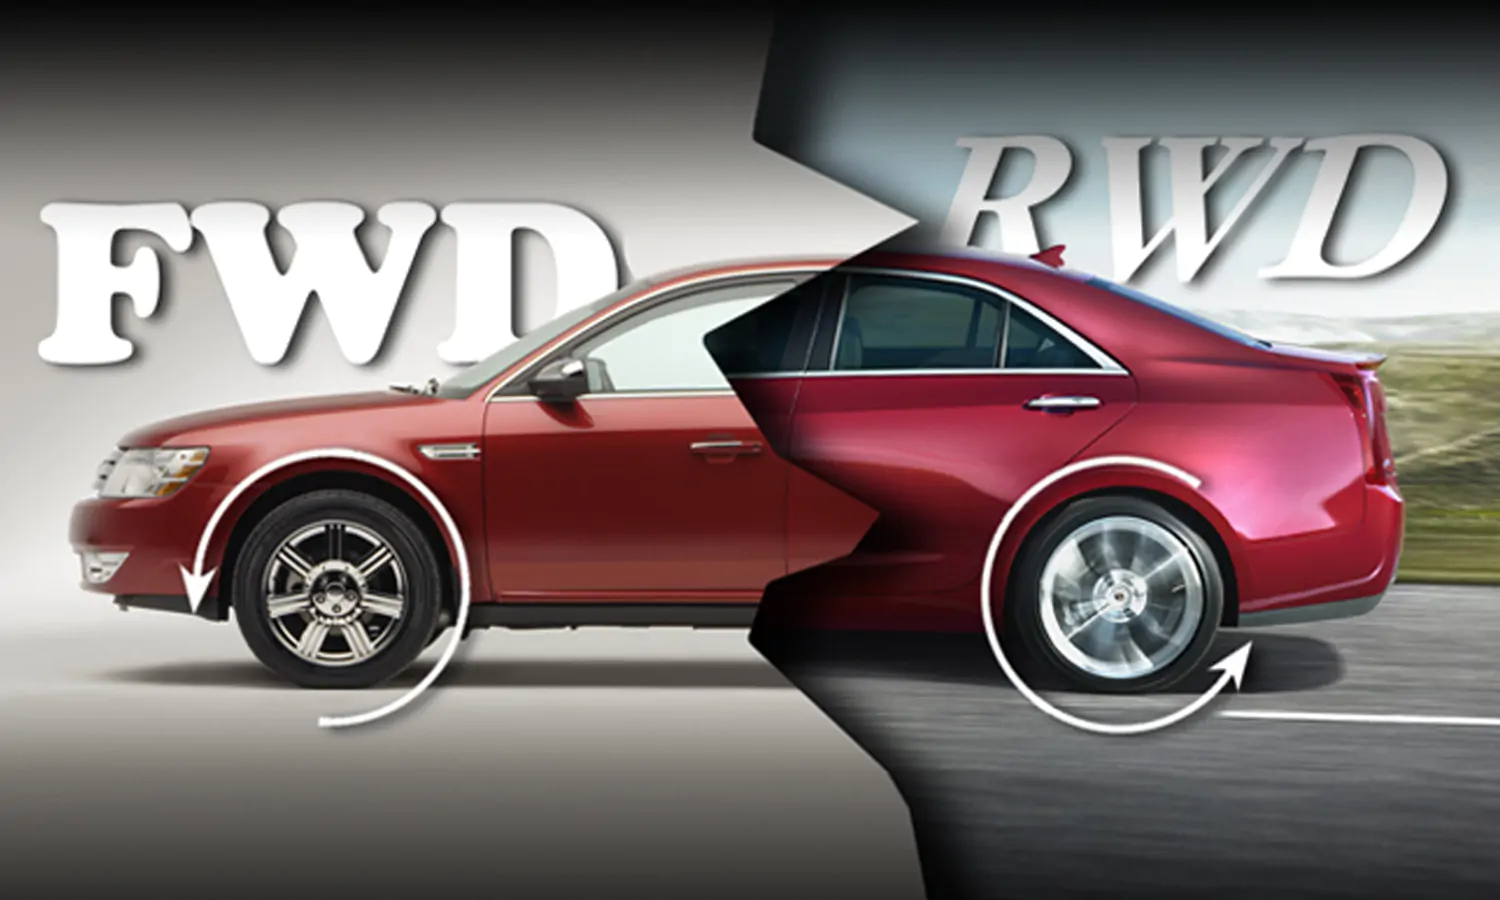 Fwd rwd. FWD привод. FWD vs RWD. AWD, RWD, FWD. Тип привода RWD что это.